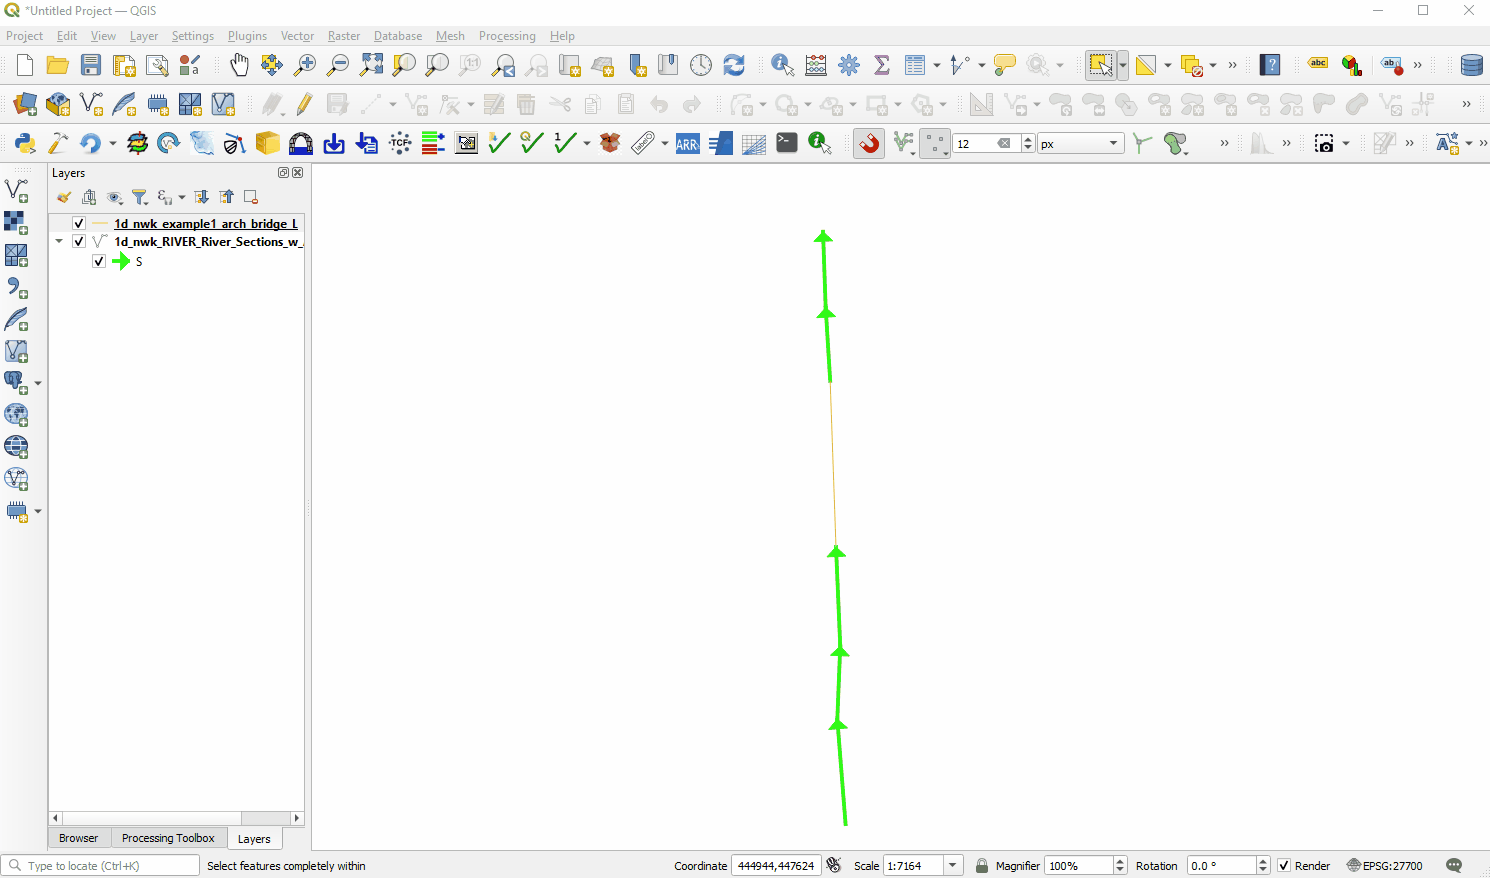 Arch bridge editor example1 gis inputs.gif